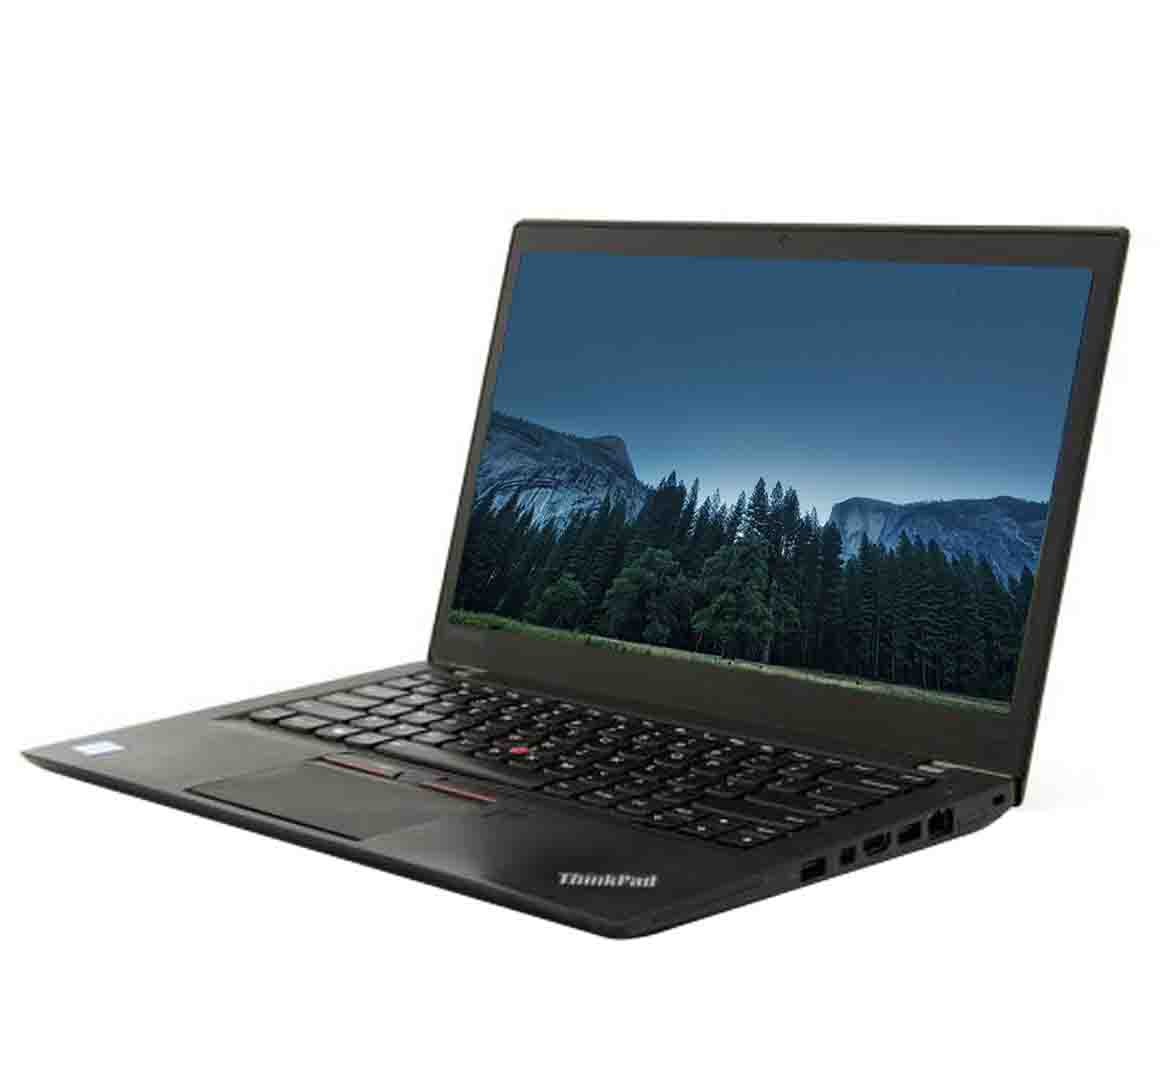 Lenovo ThinkPad T460s Business Laptop, Intel Core i7-6th Gen. CPU, 8GB RAM, 1TB SSD, 14.1 inch Display, Windows 10 Pro, Refurbished Laptop